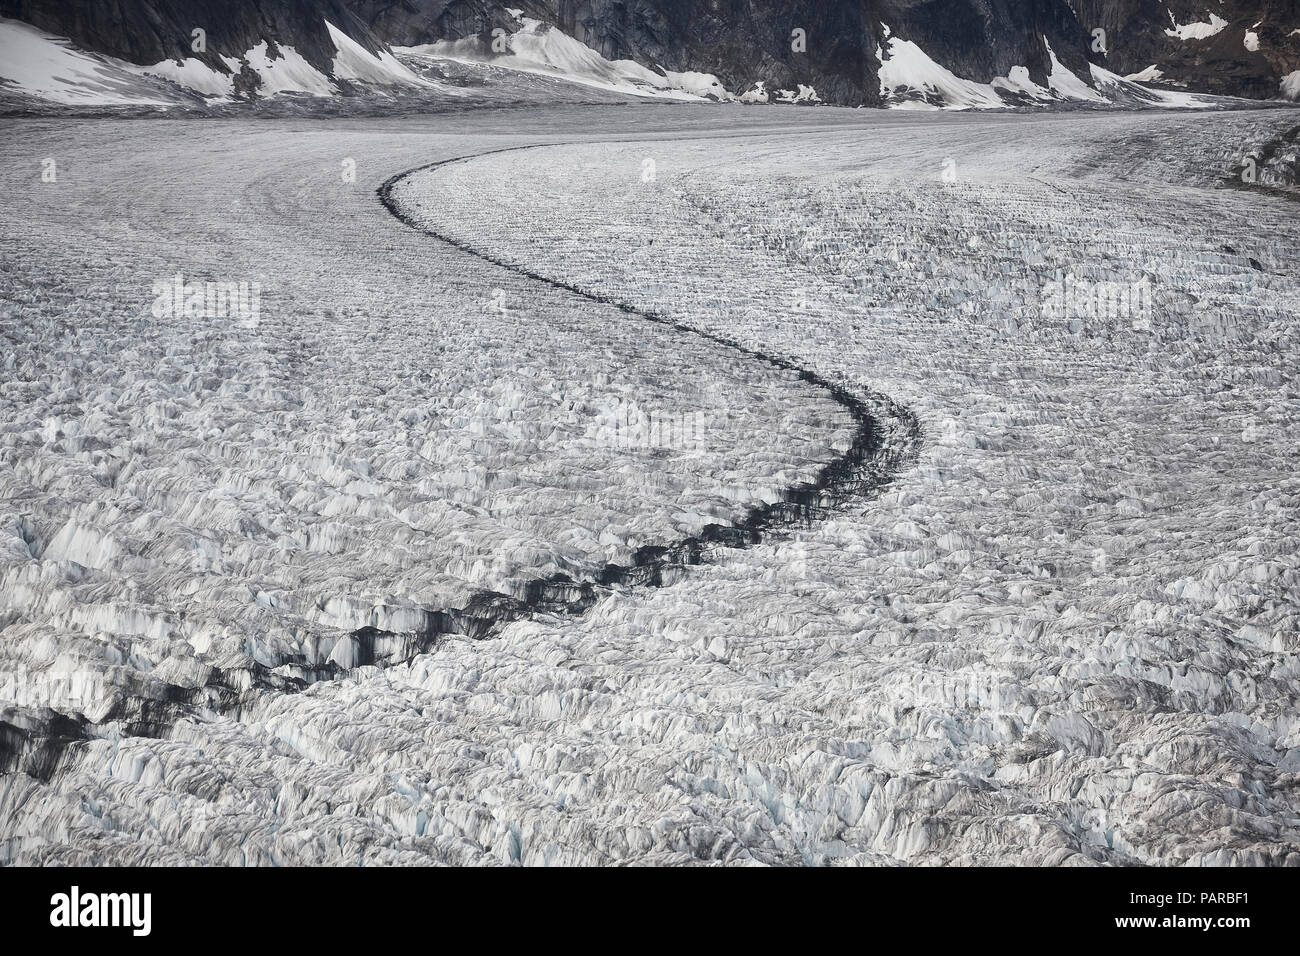 USA, Alaska, Denali National Park, glacier tongue Stock Photo